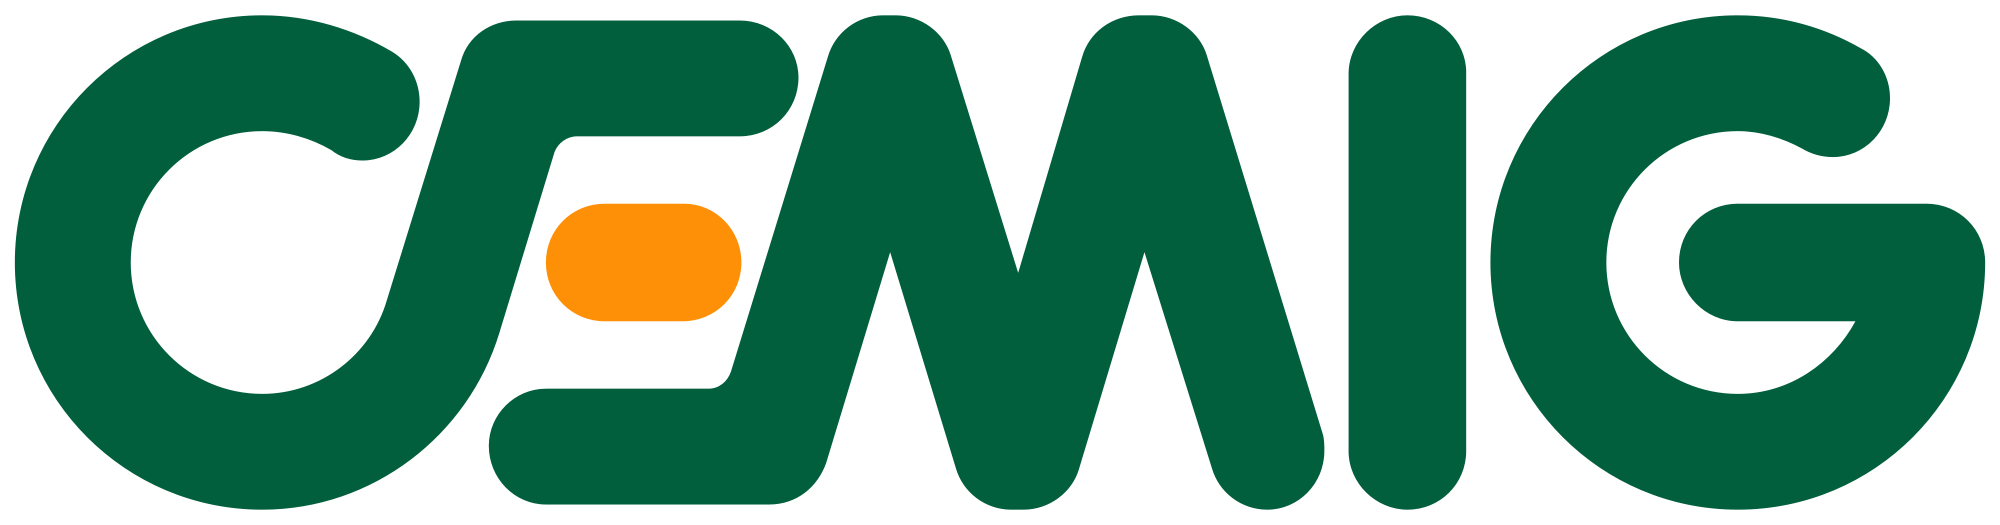 Cemig Brand Logo